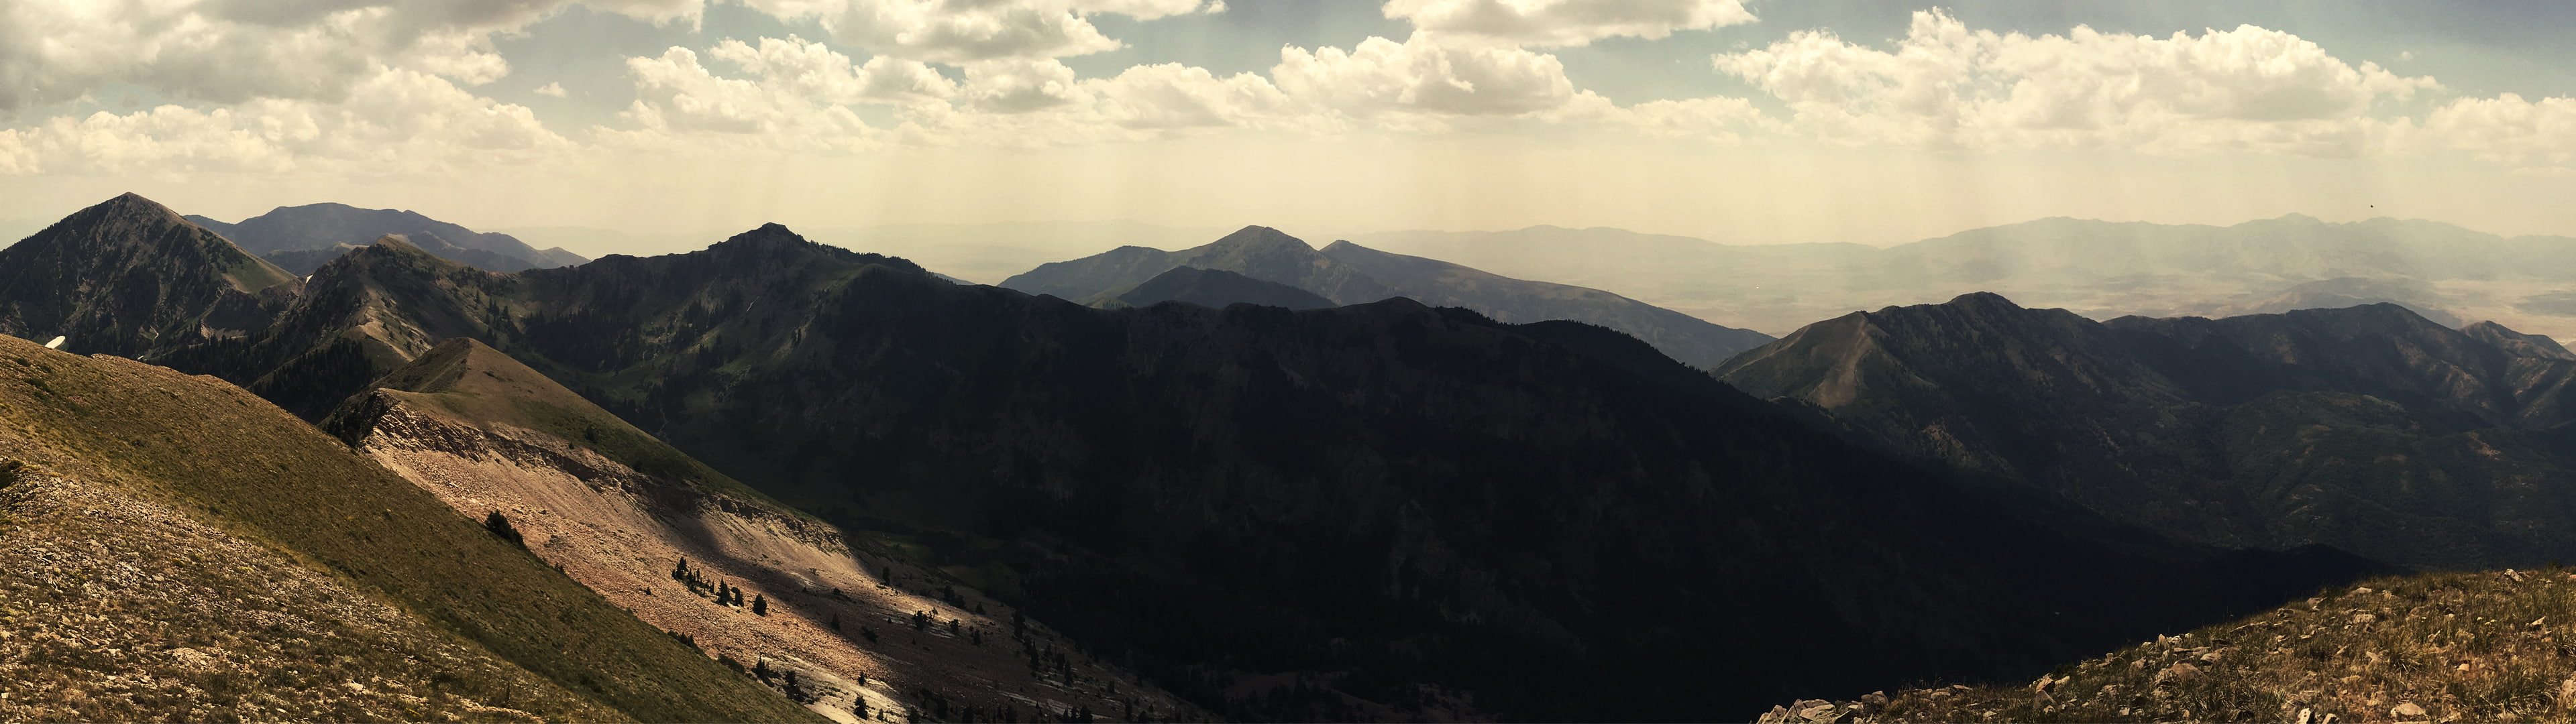 mountains, landscape, dual monitors, Utah, mountain range, sky